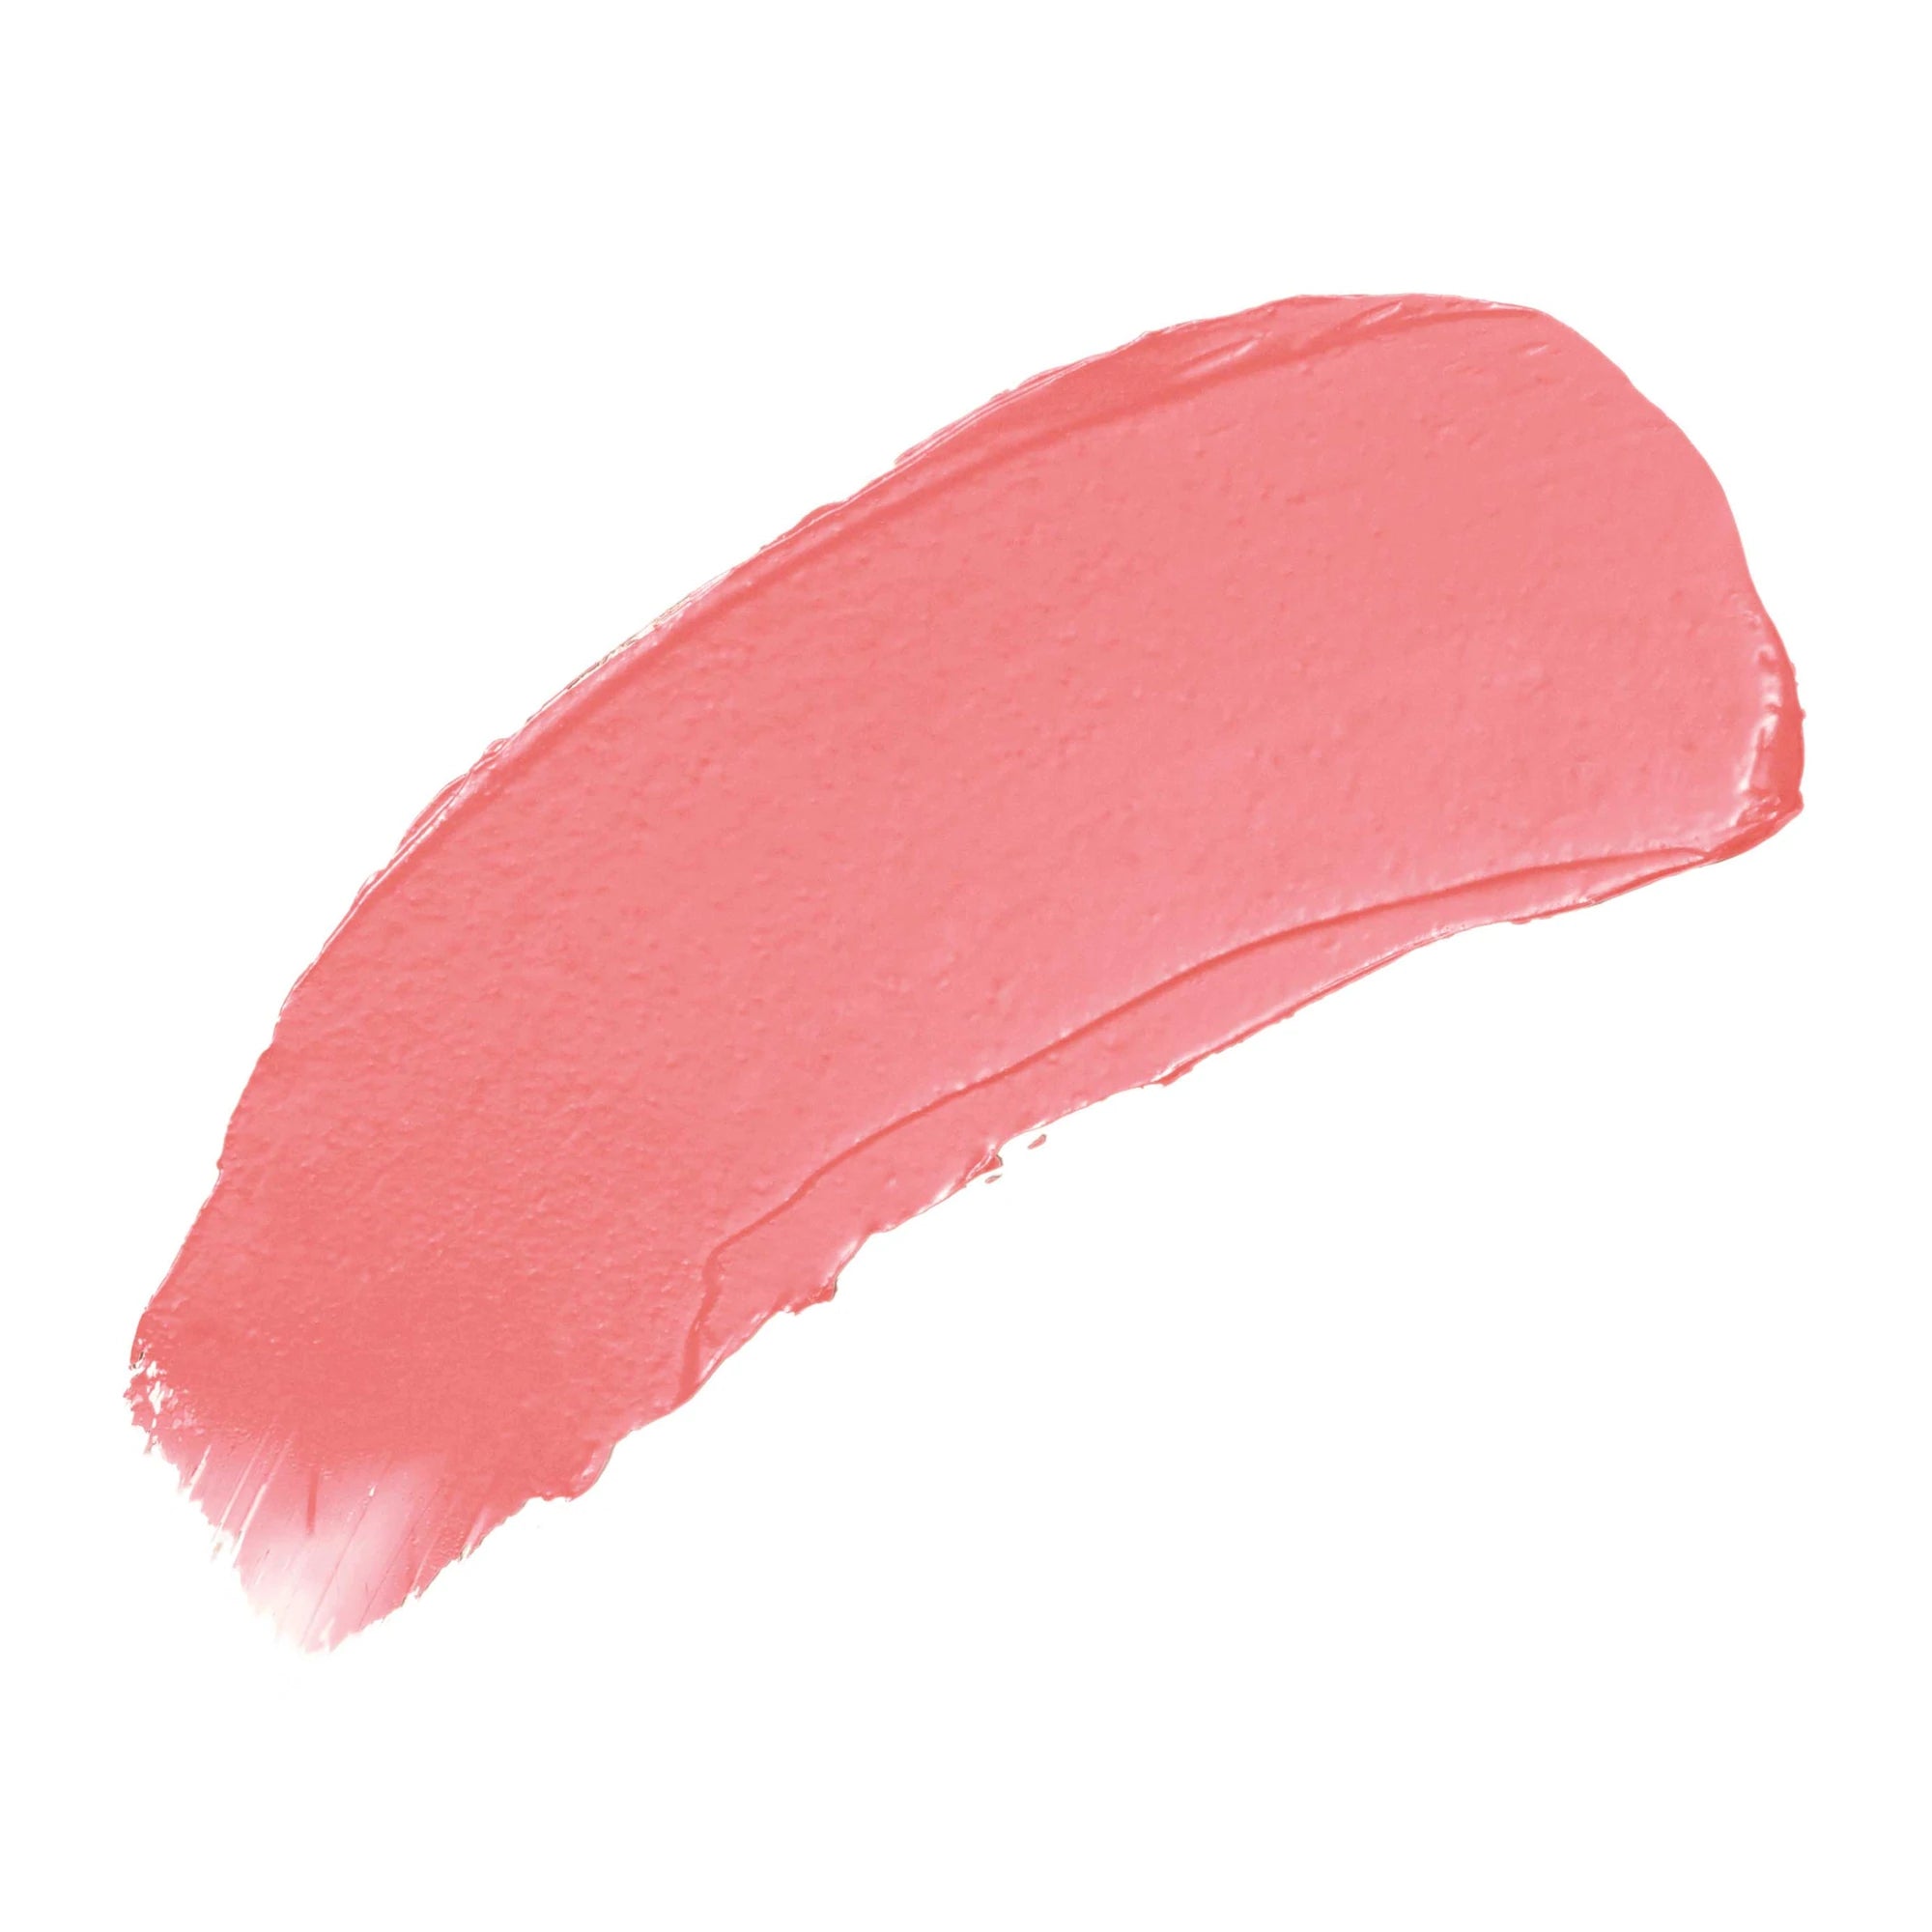 Jane Iredale's Triple Luxe™ Long-Lasting Naturally Moist Lipstick shade Sakura - warm bubblegum pink